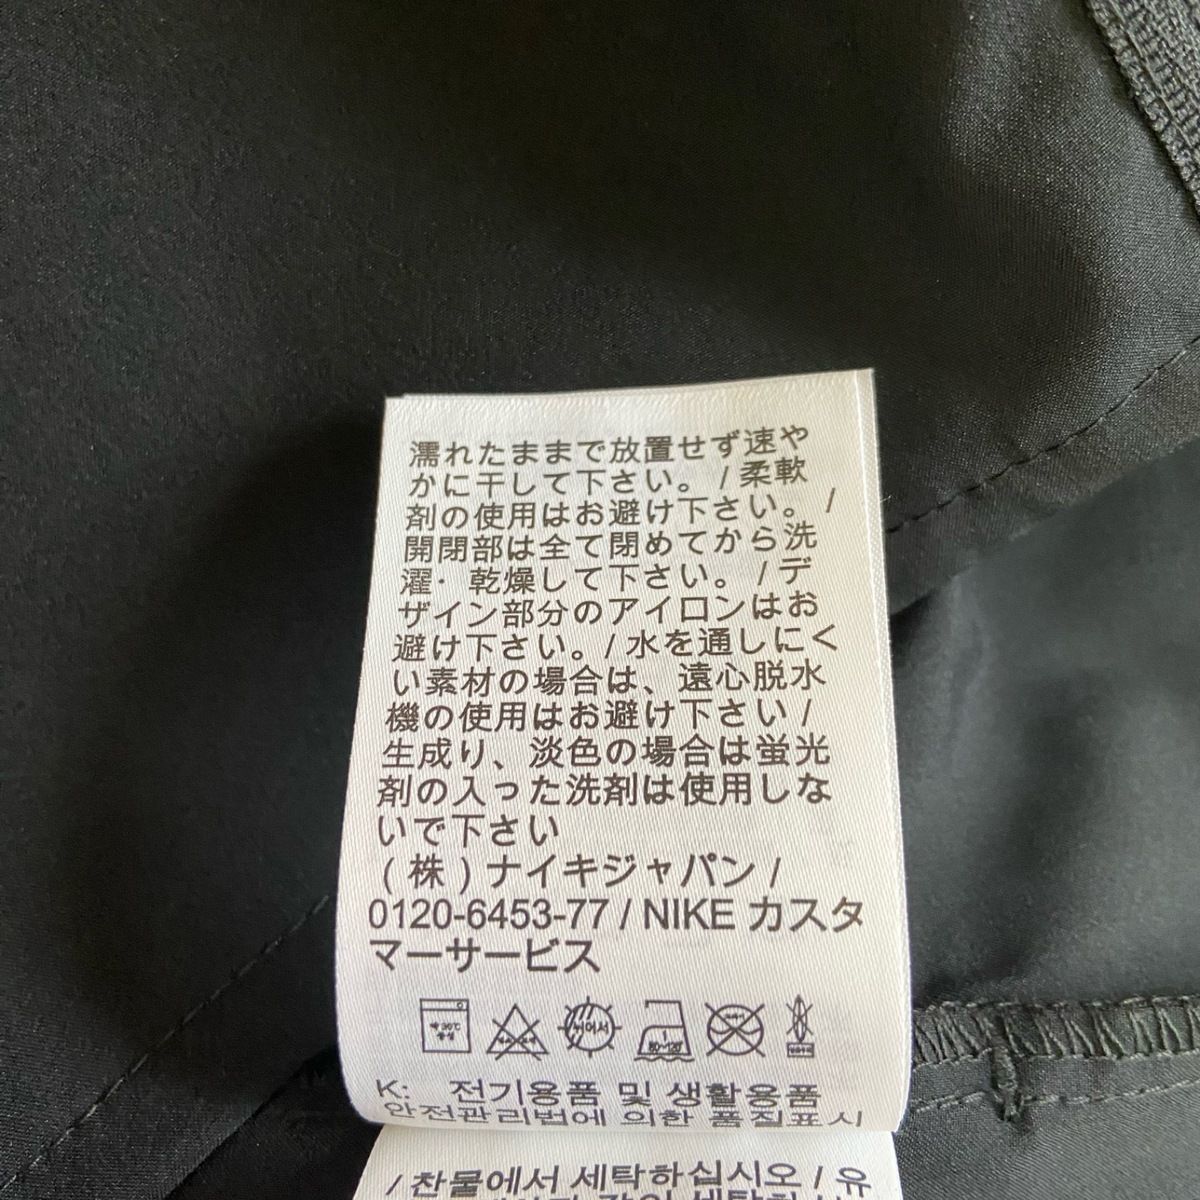 NIKE(ナイキ) ブルゾン サイズM メンズ美品 - 黒 長袖/春/秋